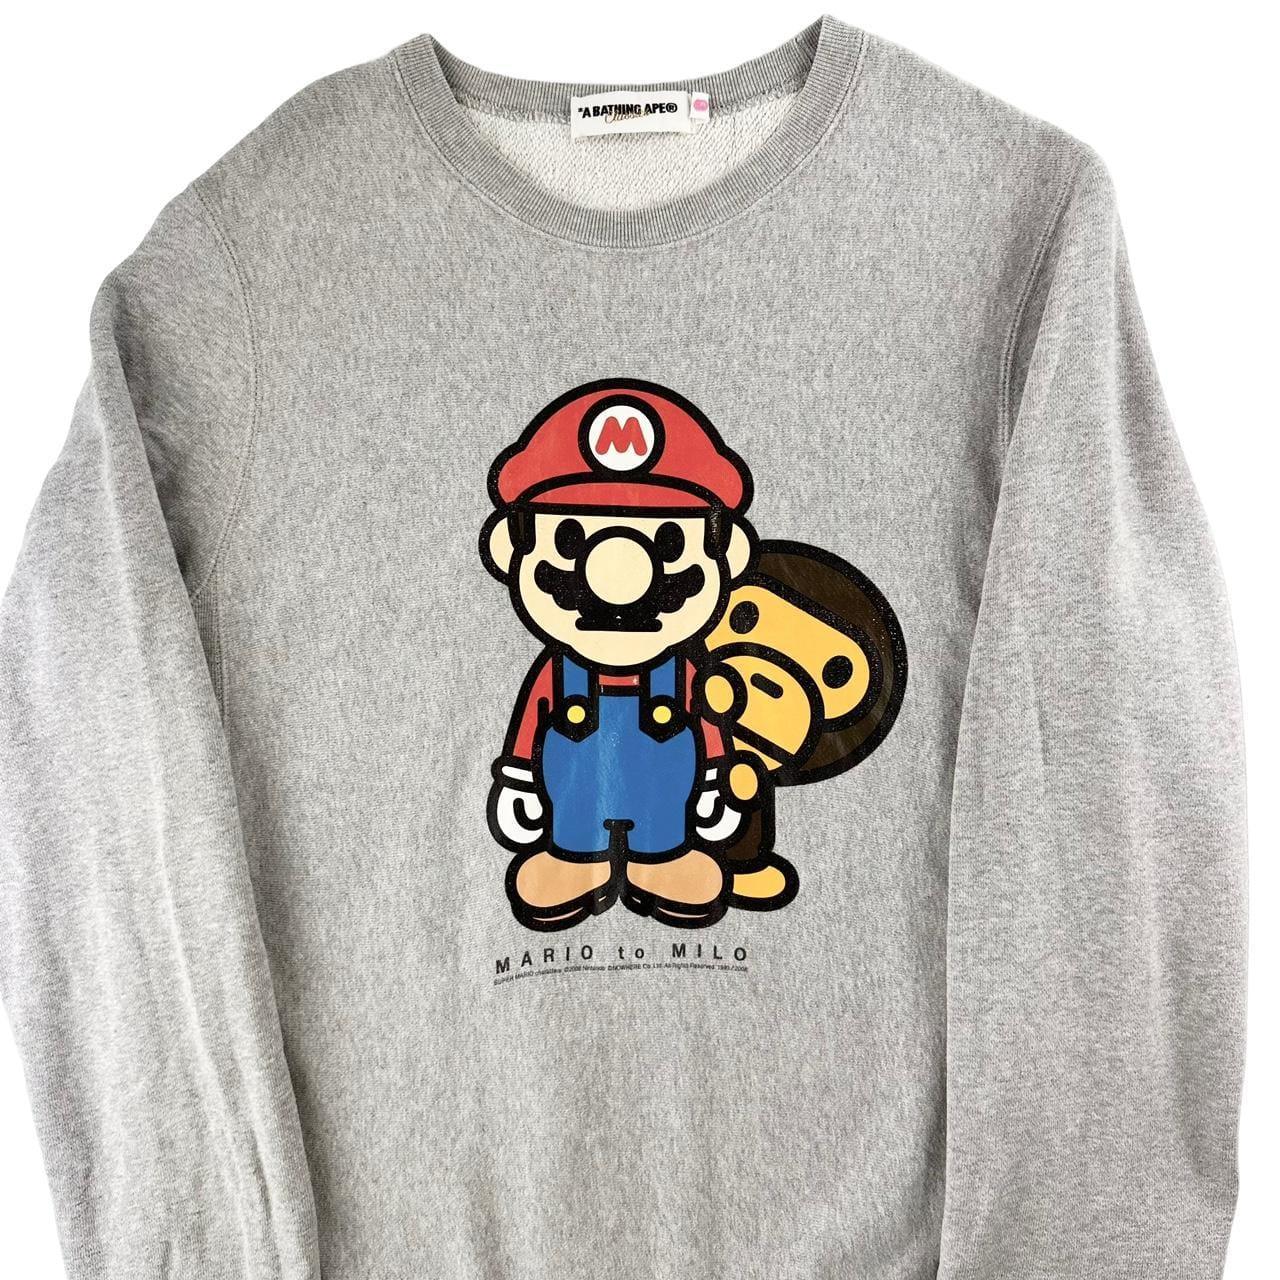 Bape X Nintendo Mario jumper sweatshirt woman’s size S - Known Source